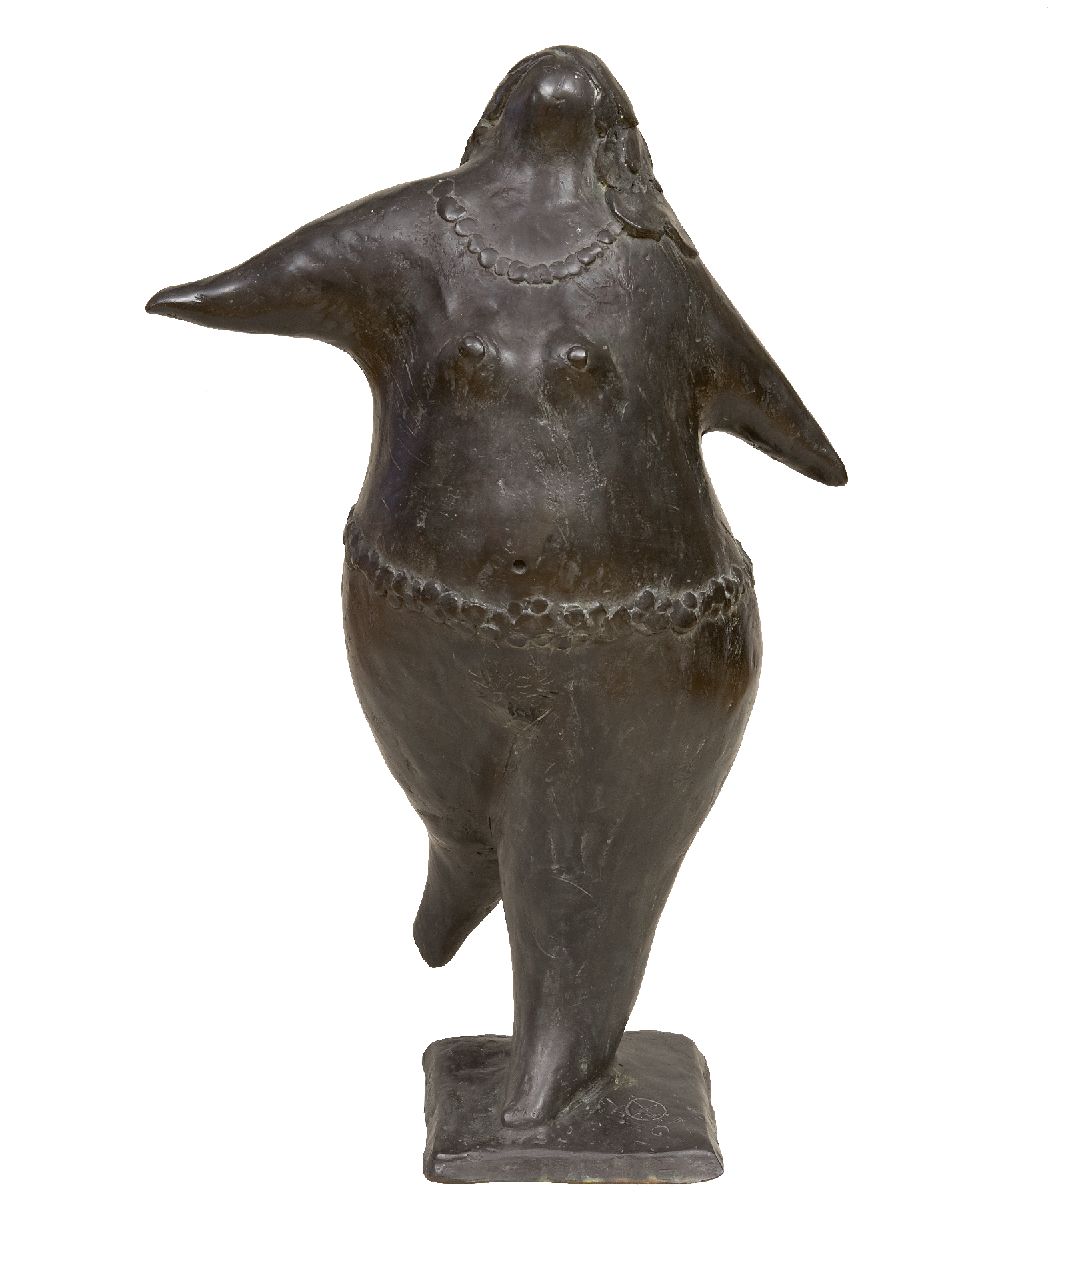 Hemert E. van | Evert van Hemert, Mata Hari, gepatineerd brons 60,0 cm, gesigneerd op basis en gedateerd op basis '07